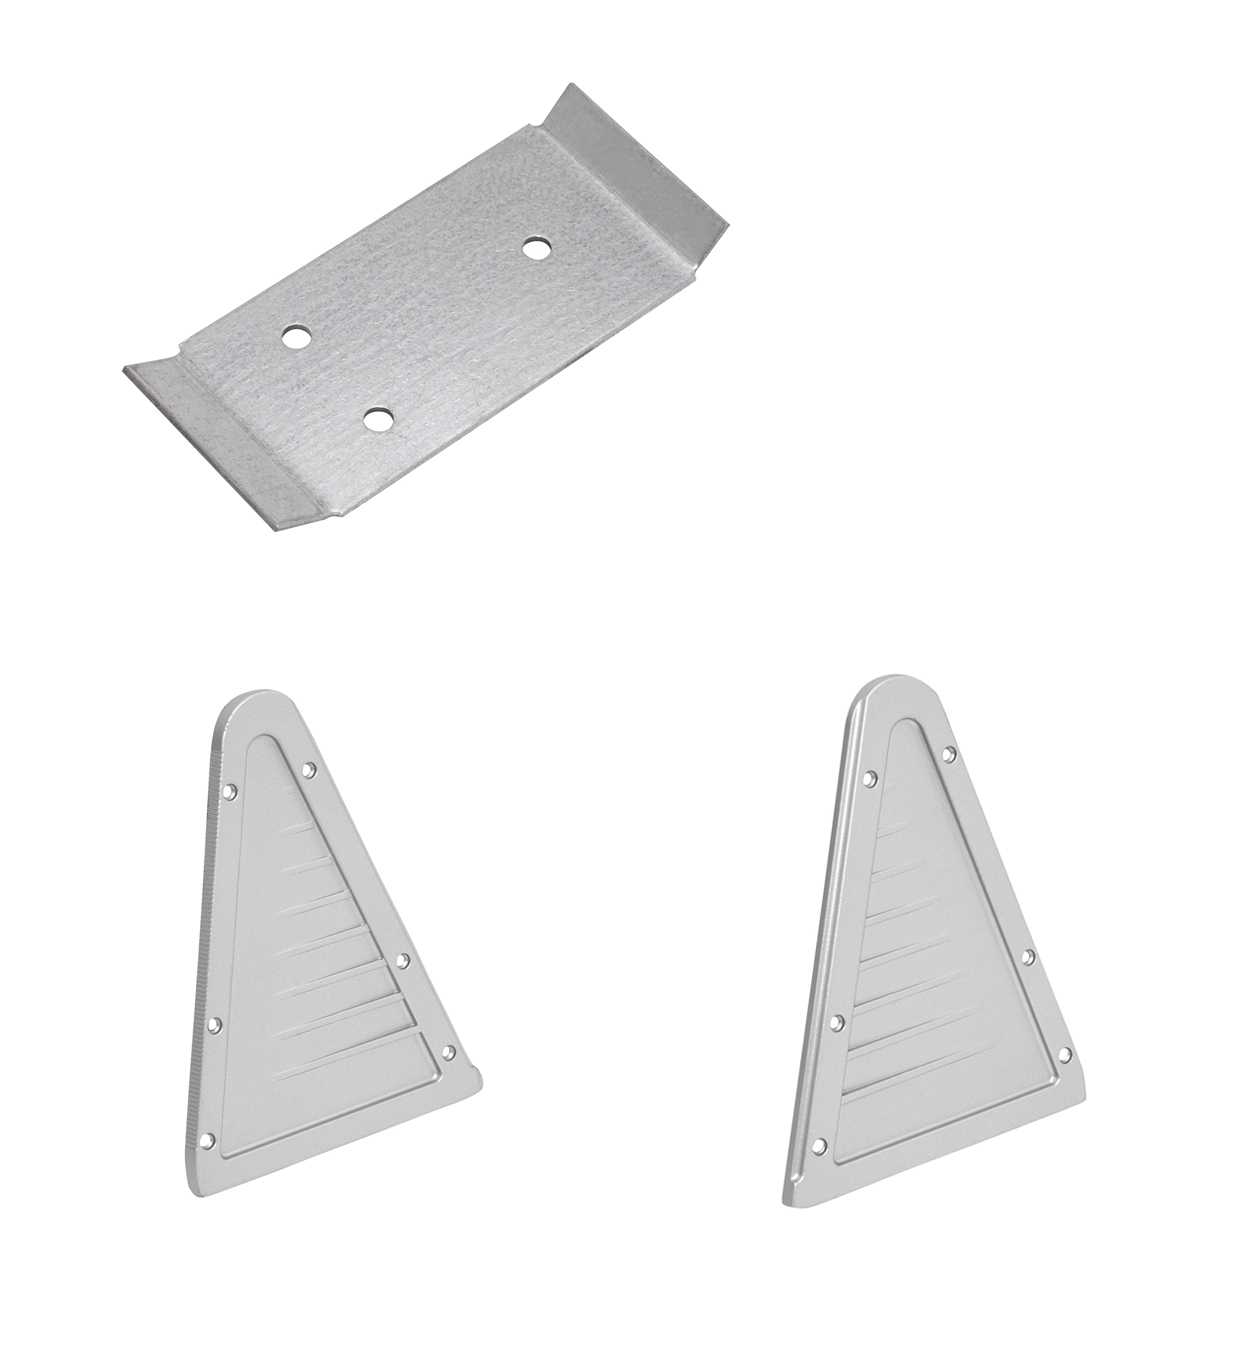 Accessories for the LED aluminum triangle profile